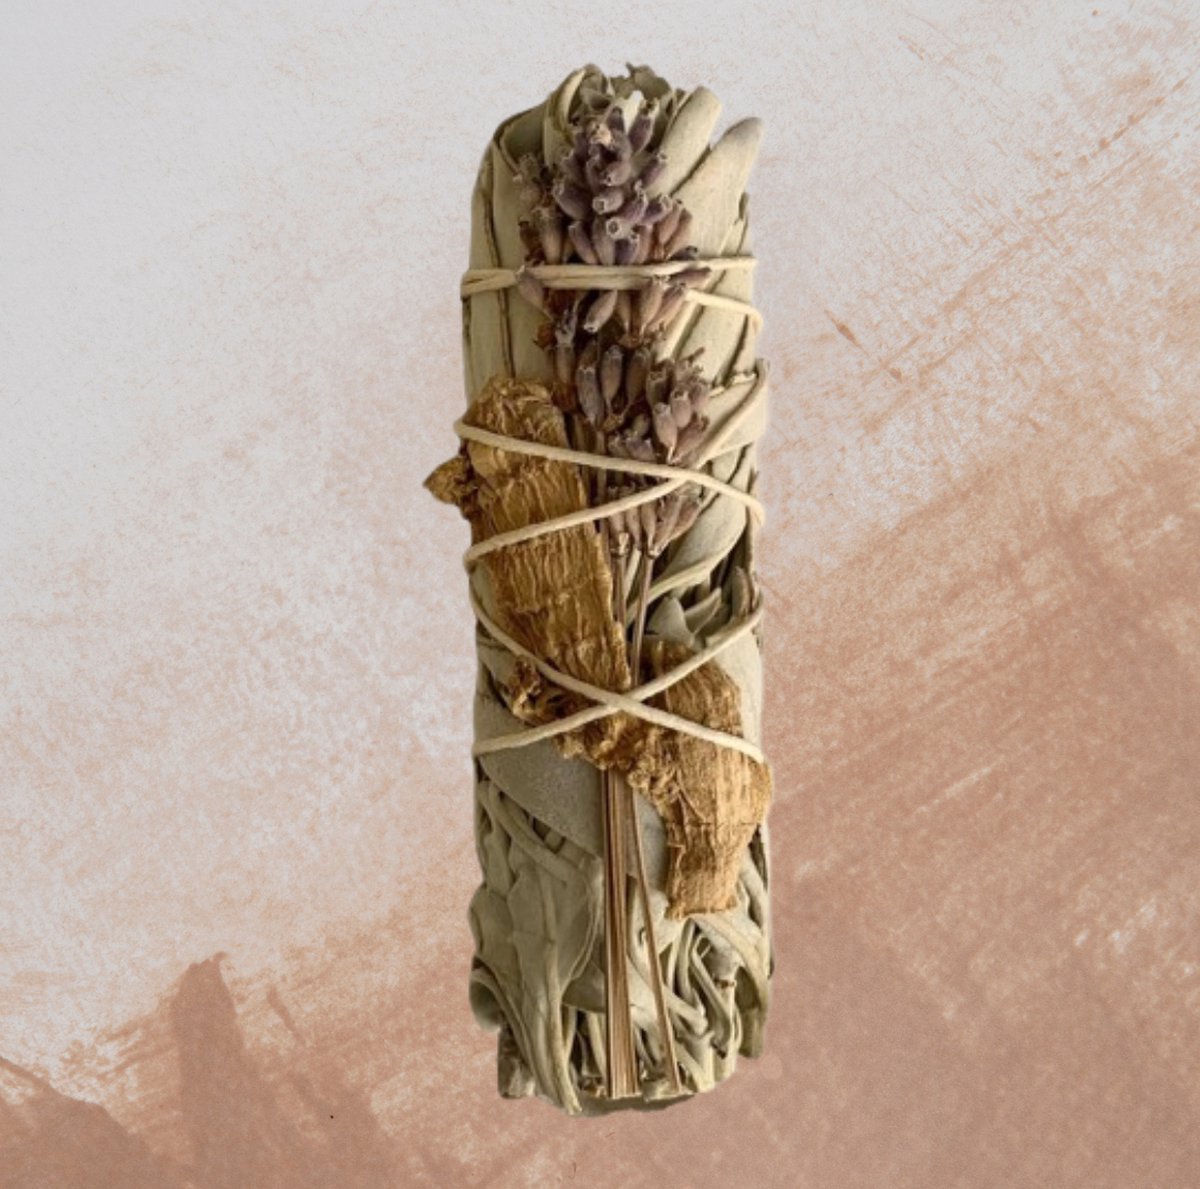 Prana - Healing & Calming smudge stick - Witte Salie Lavendel Gember - white sage lavender ginger - 1 stuk - 11cm - meditatie - yoga - huis reiniging - zuivering - helend - kalmerend